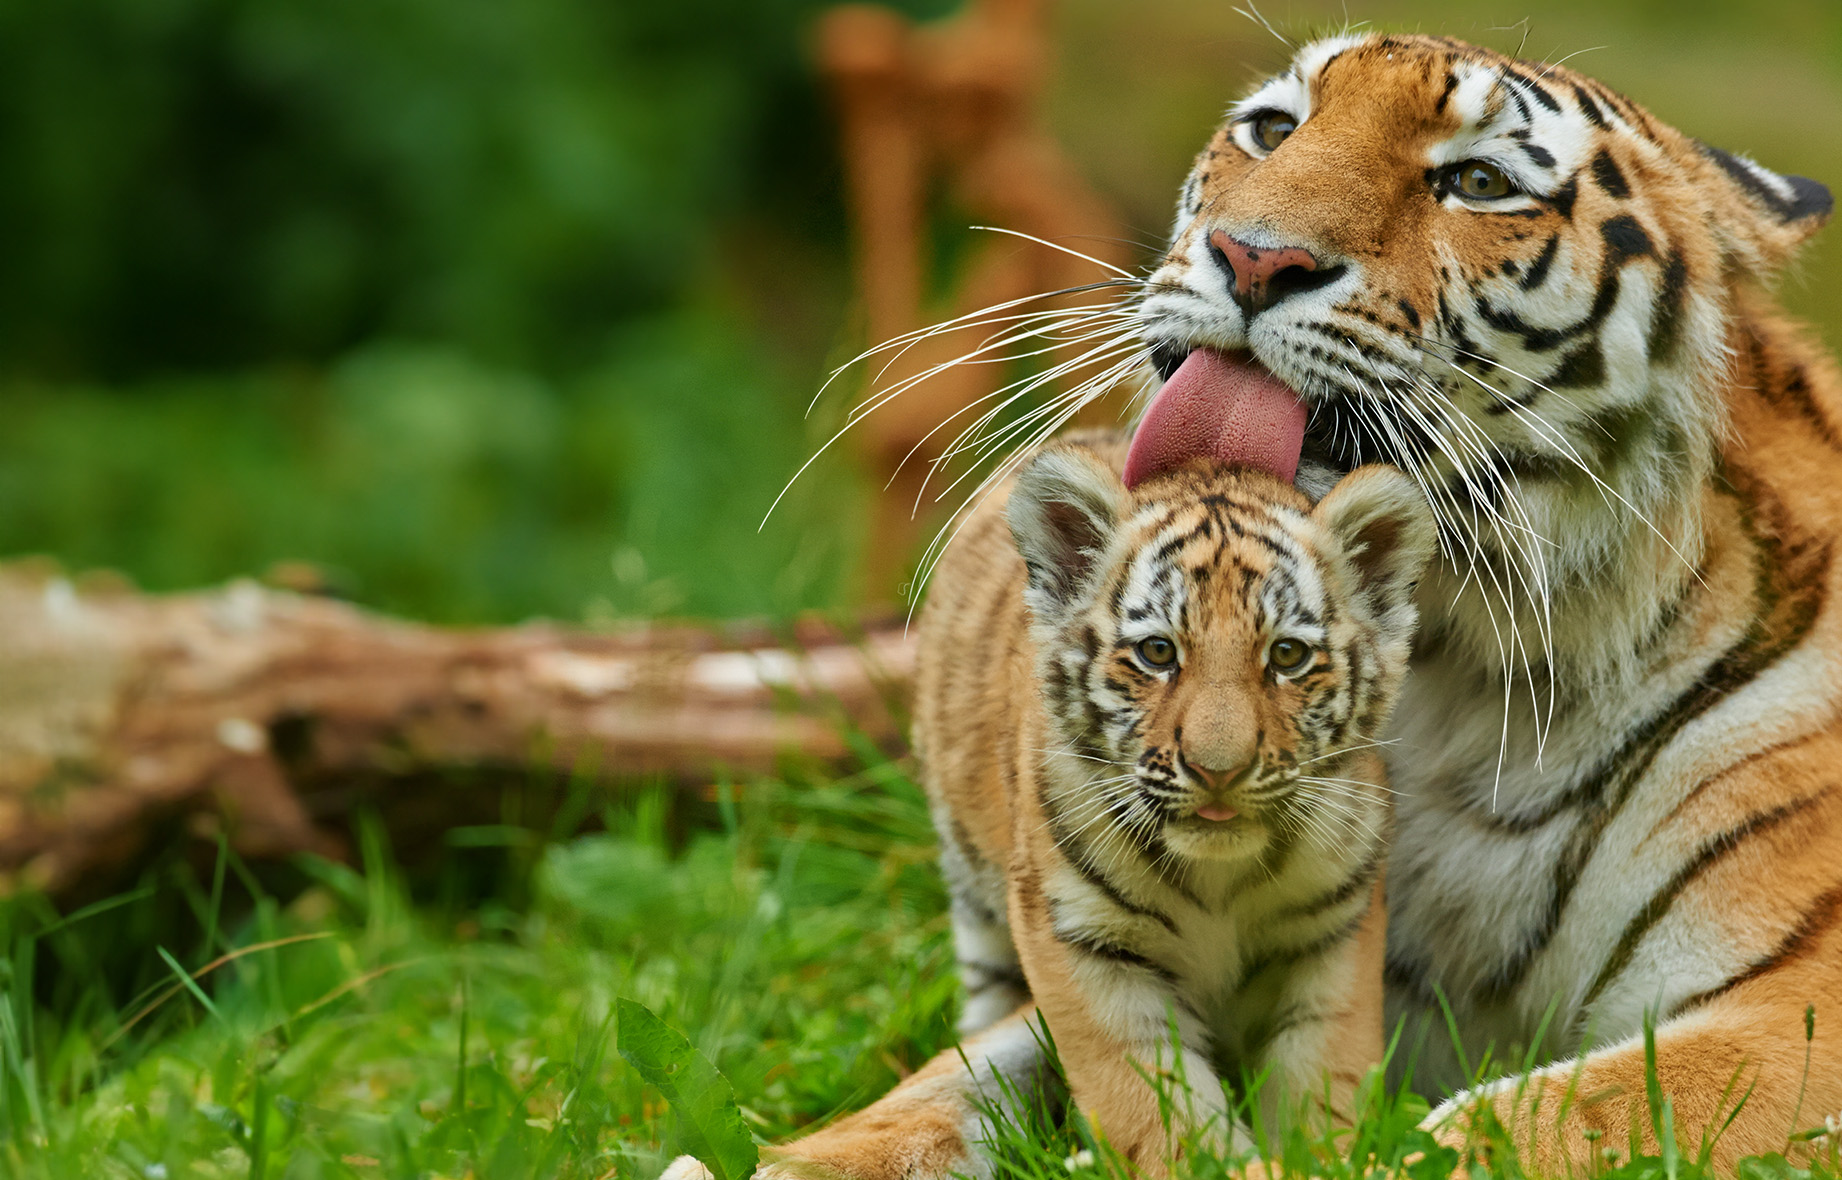 Mother tiger licking her tiger cub.